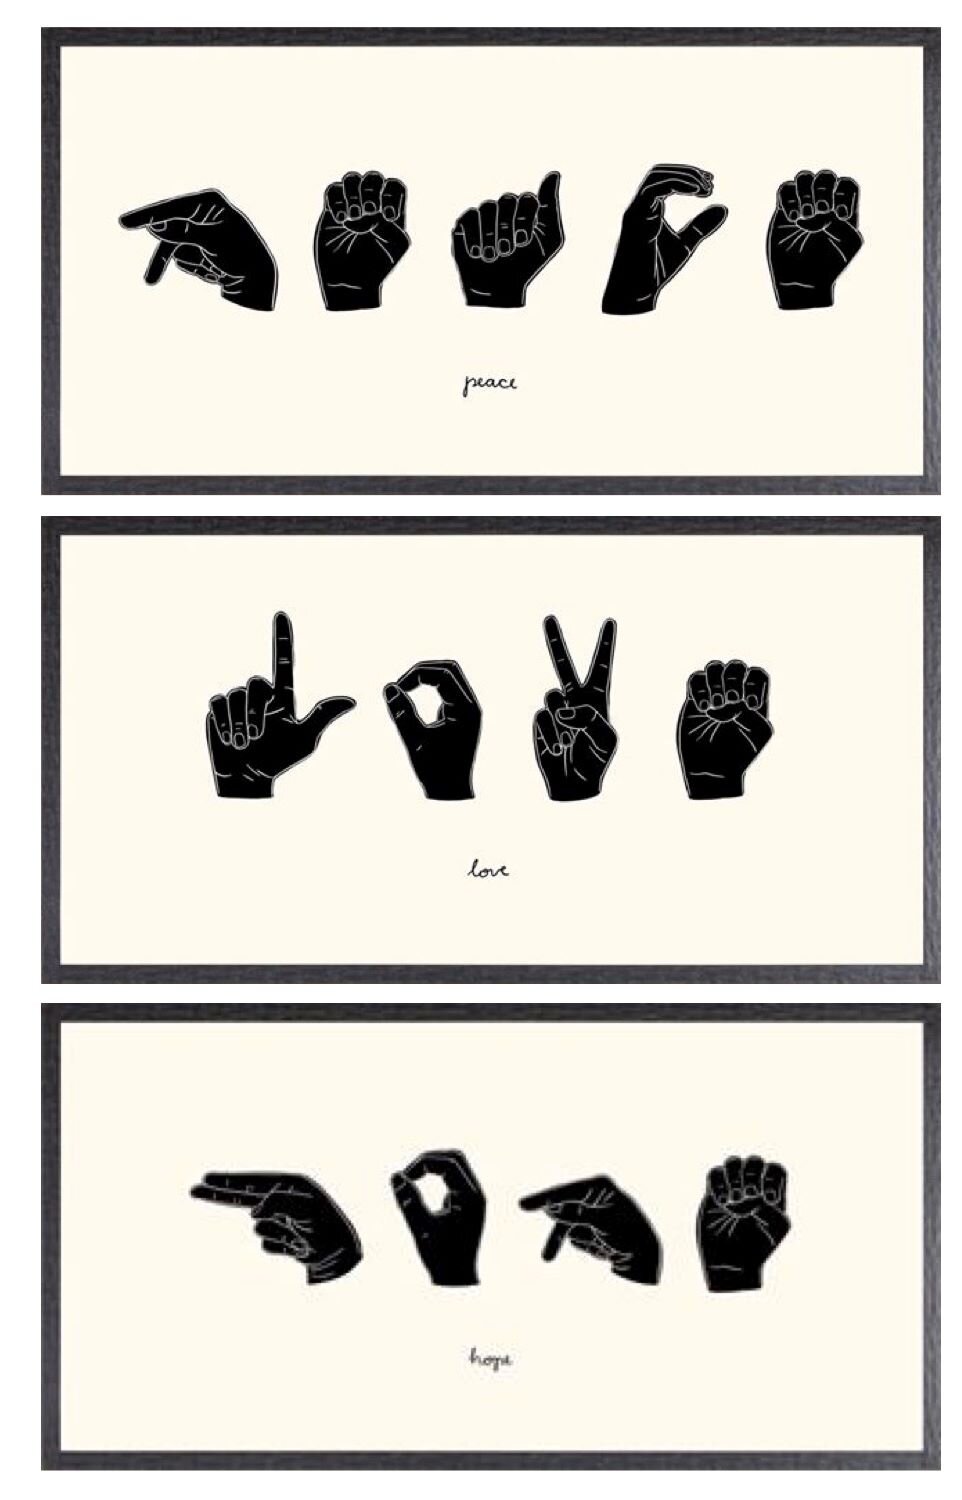 Sign Language silhouettes by Emma Scarvey, 25”x13”, Celadon Art. 